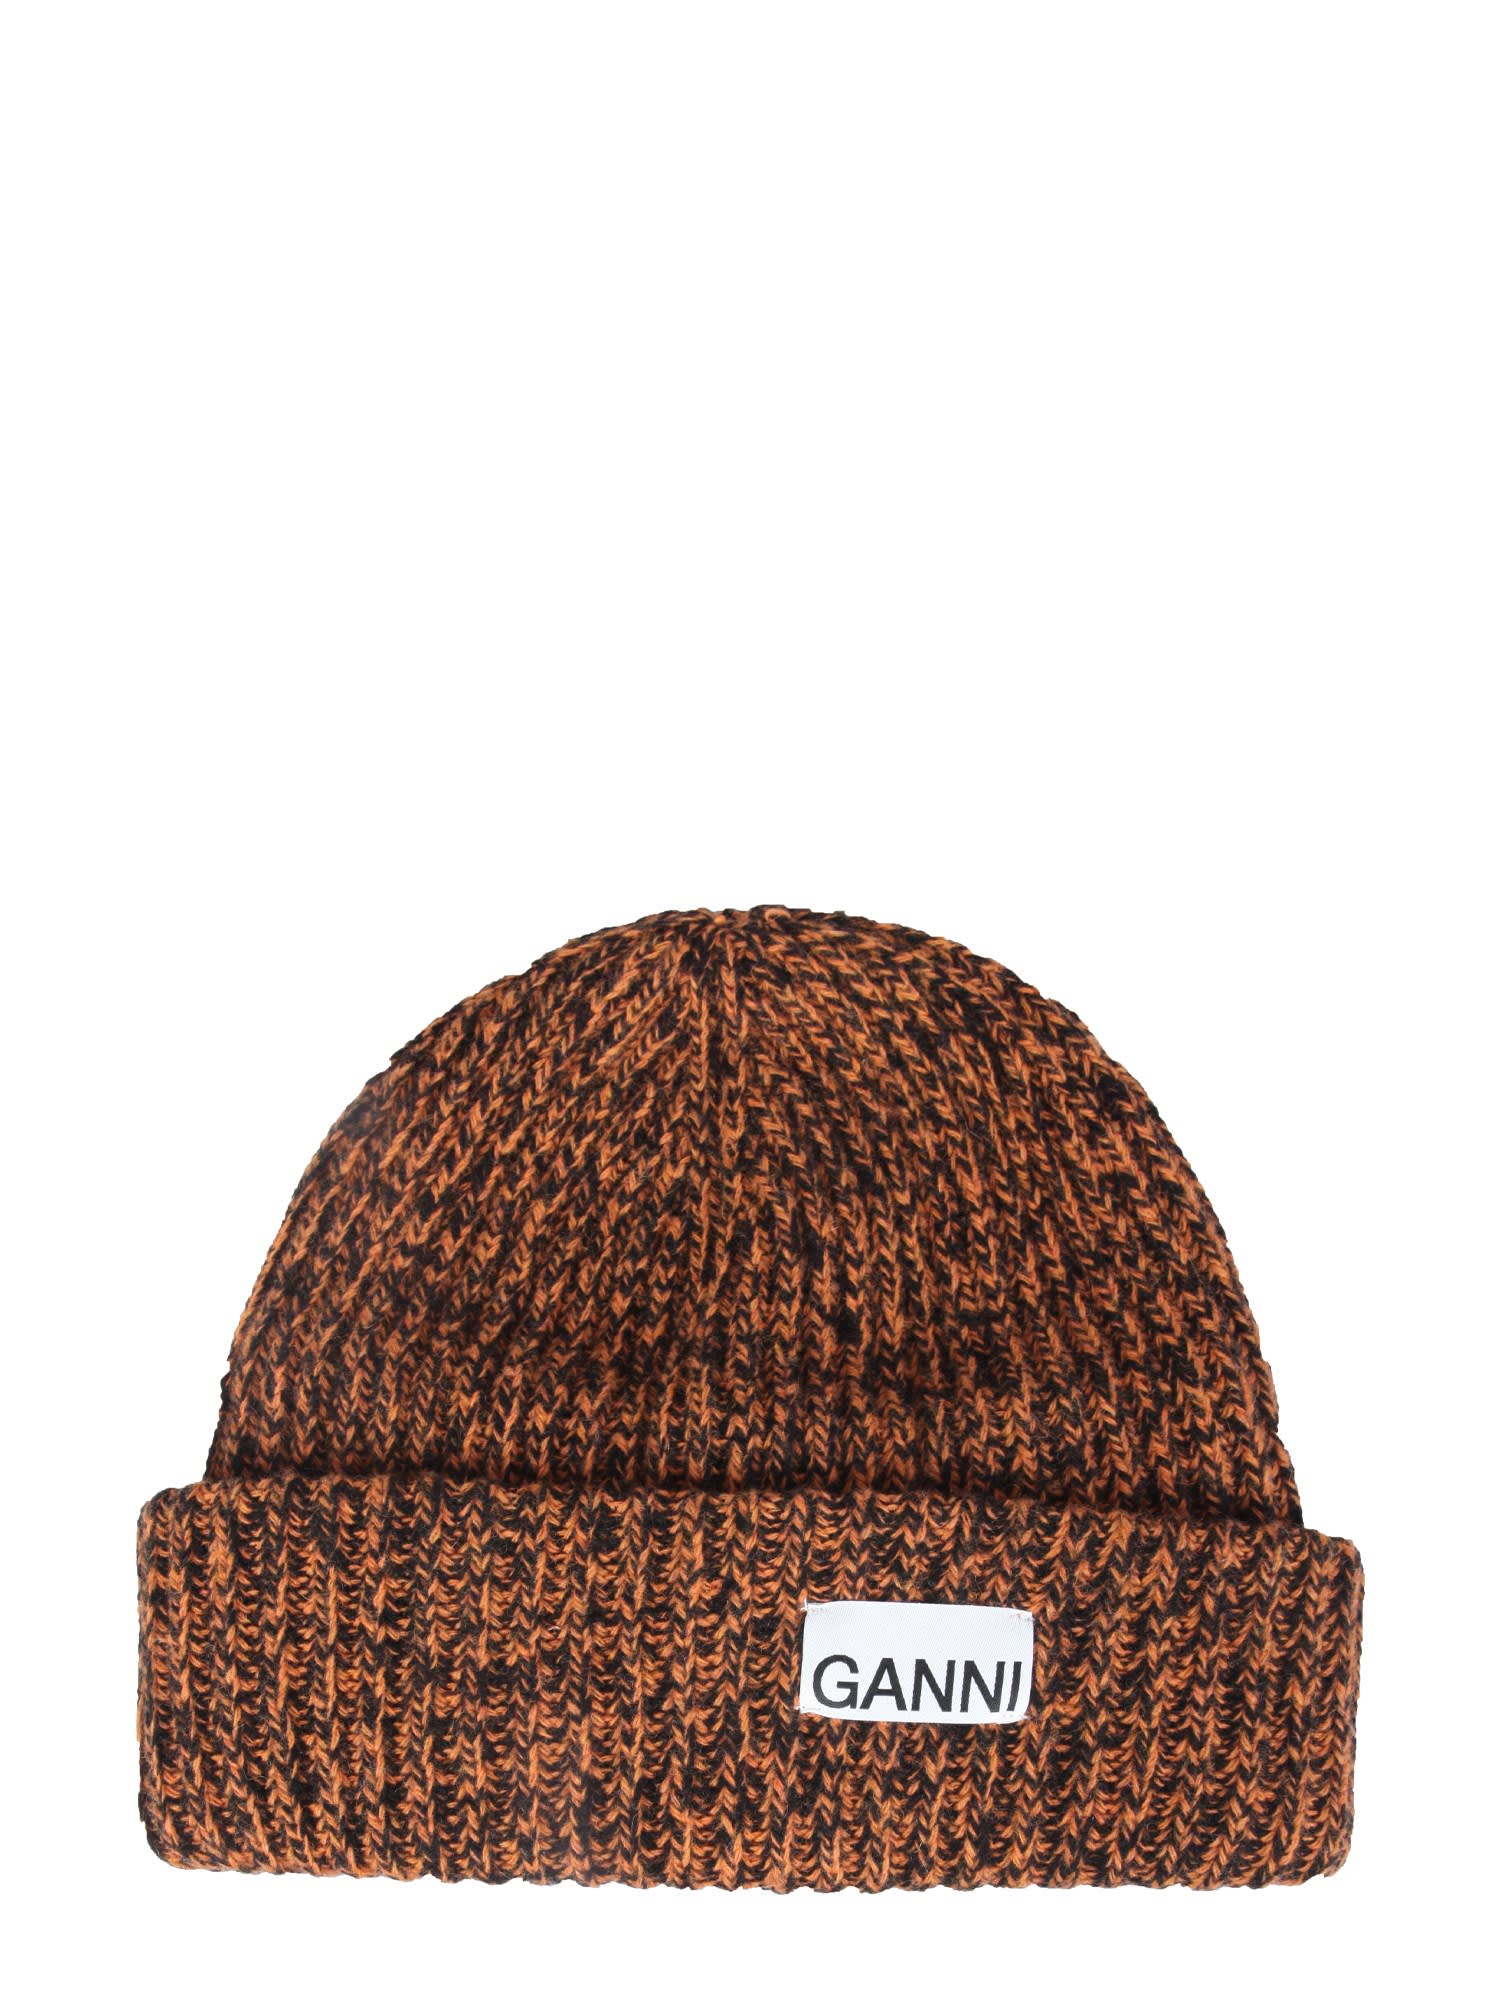 Ganni Knitted Hat